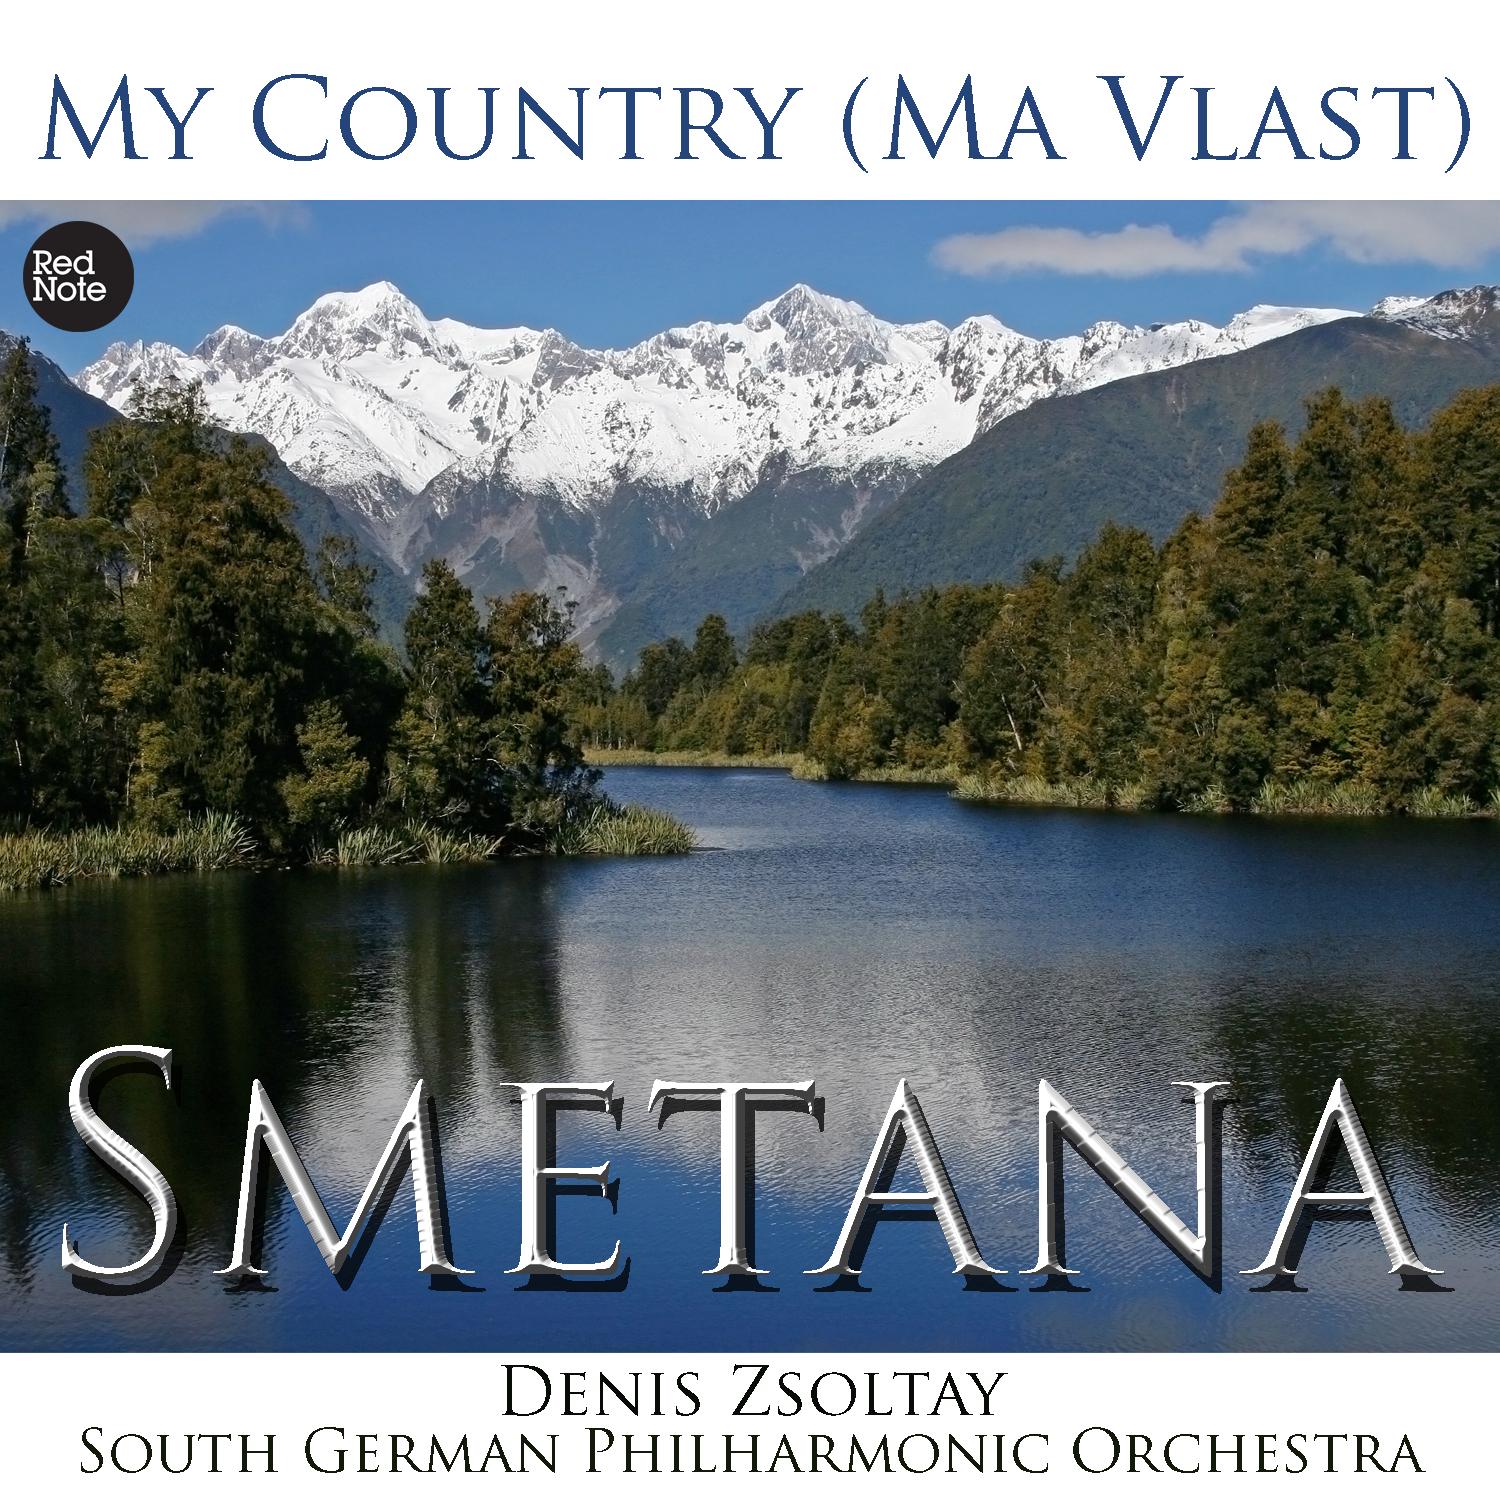 Smetana: My Country (Ma Vlast)